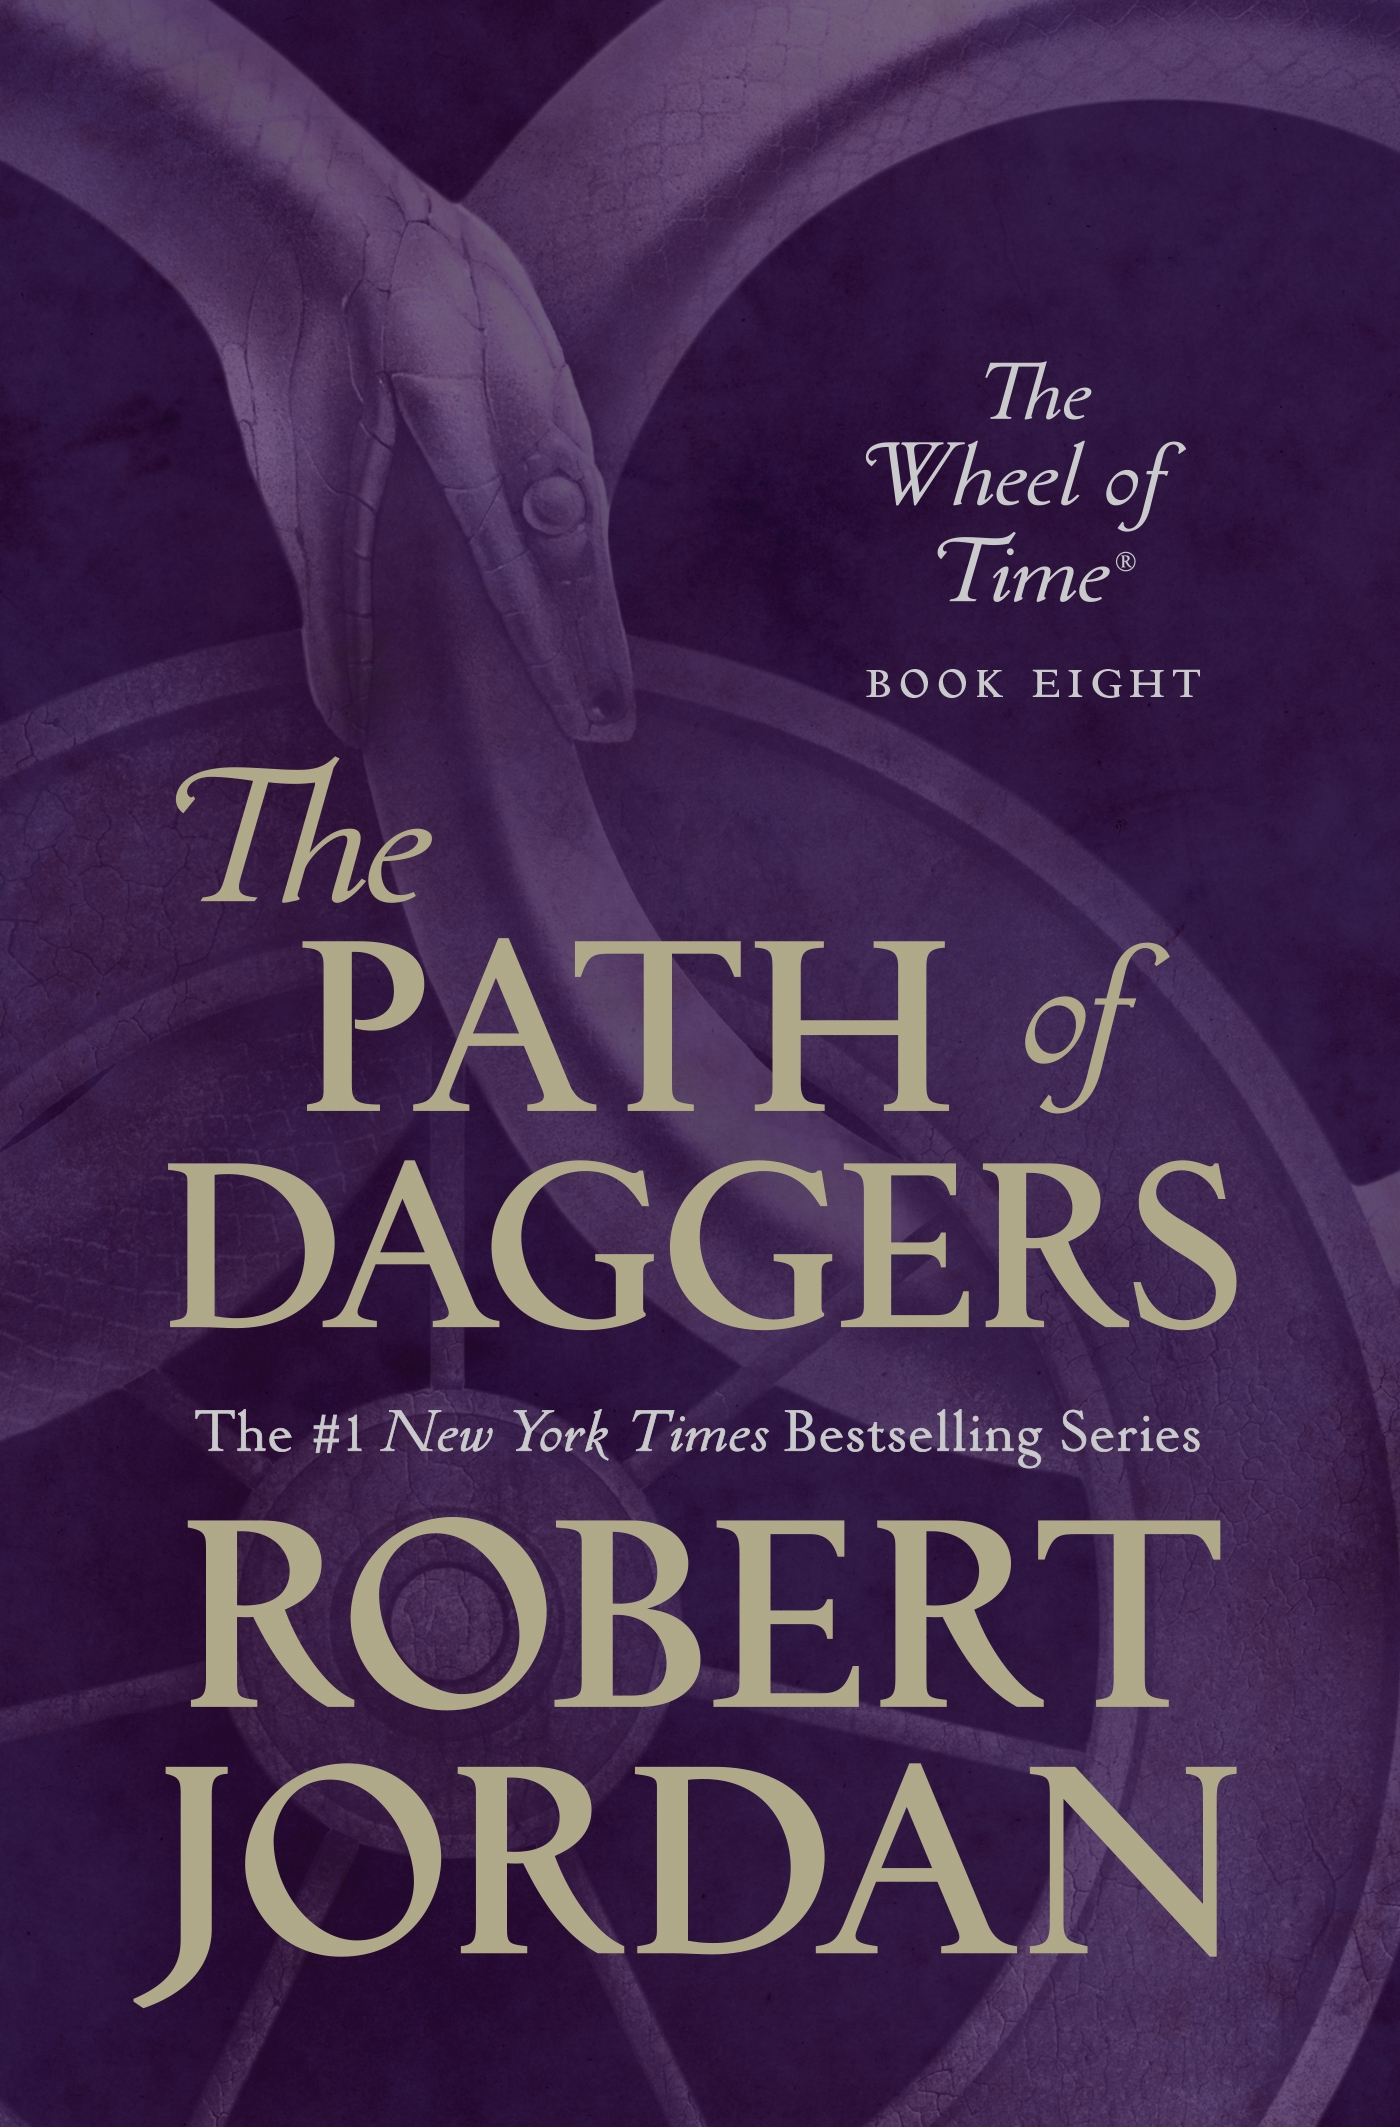 Book “The Path of Daggers” by Robert Jordan — February 25, 2020